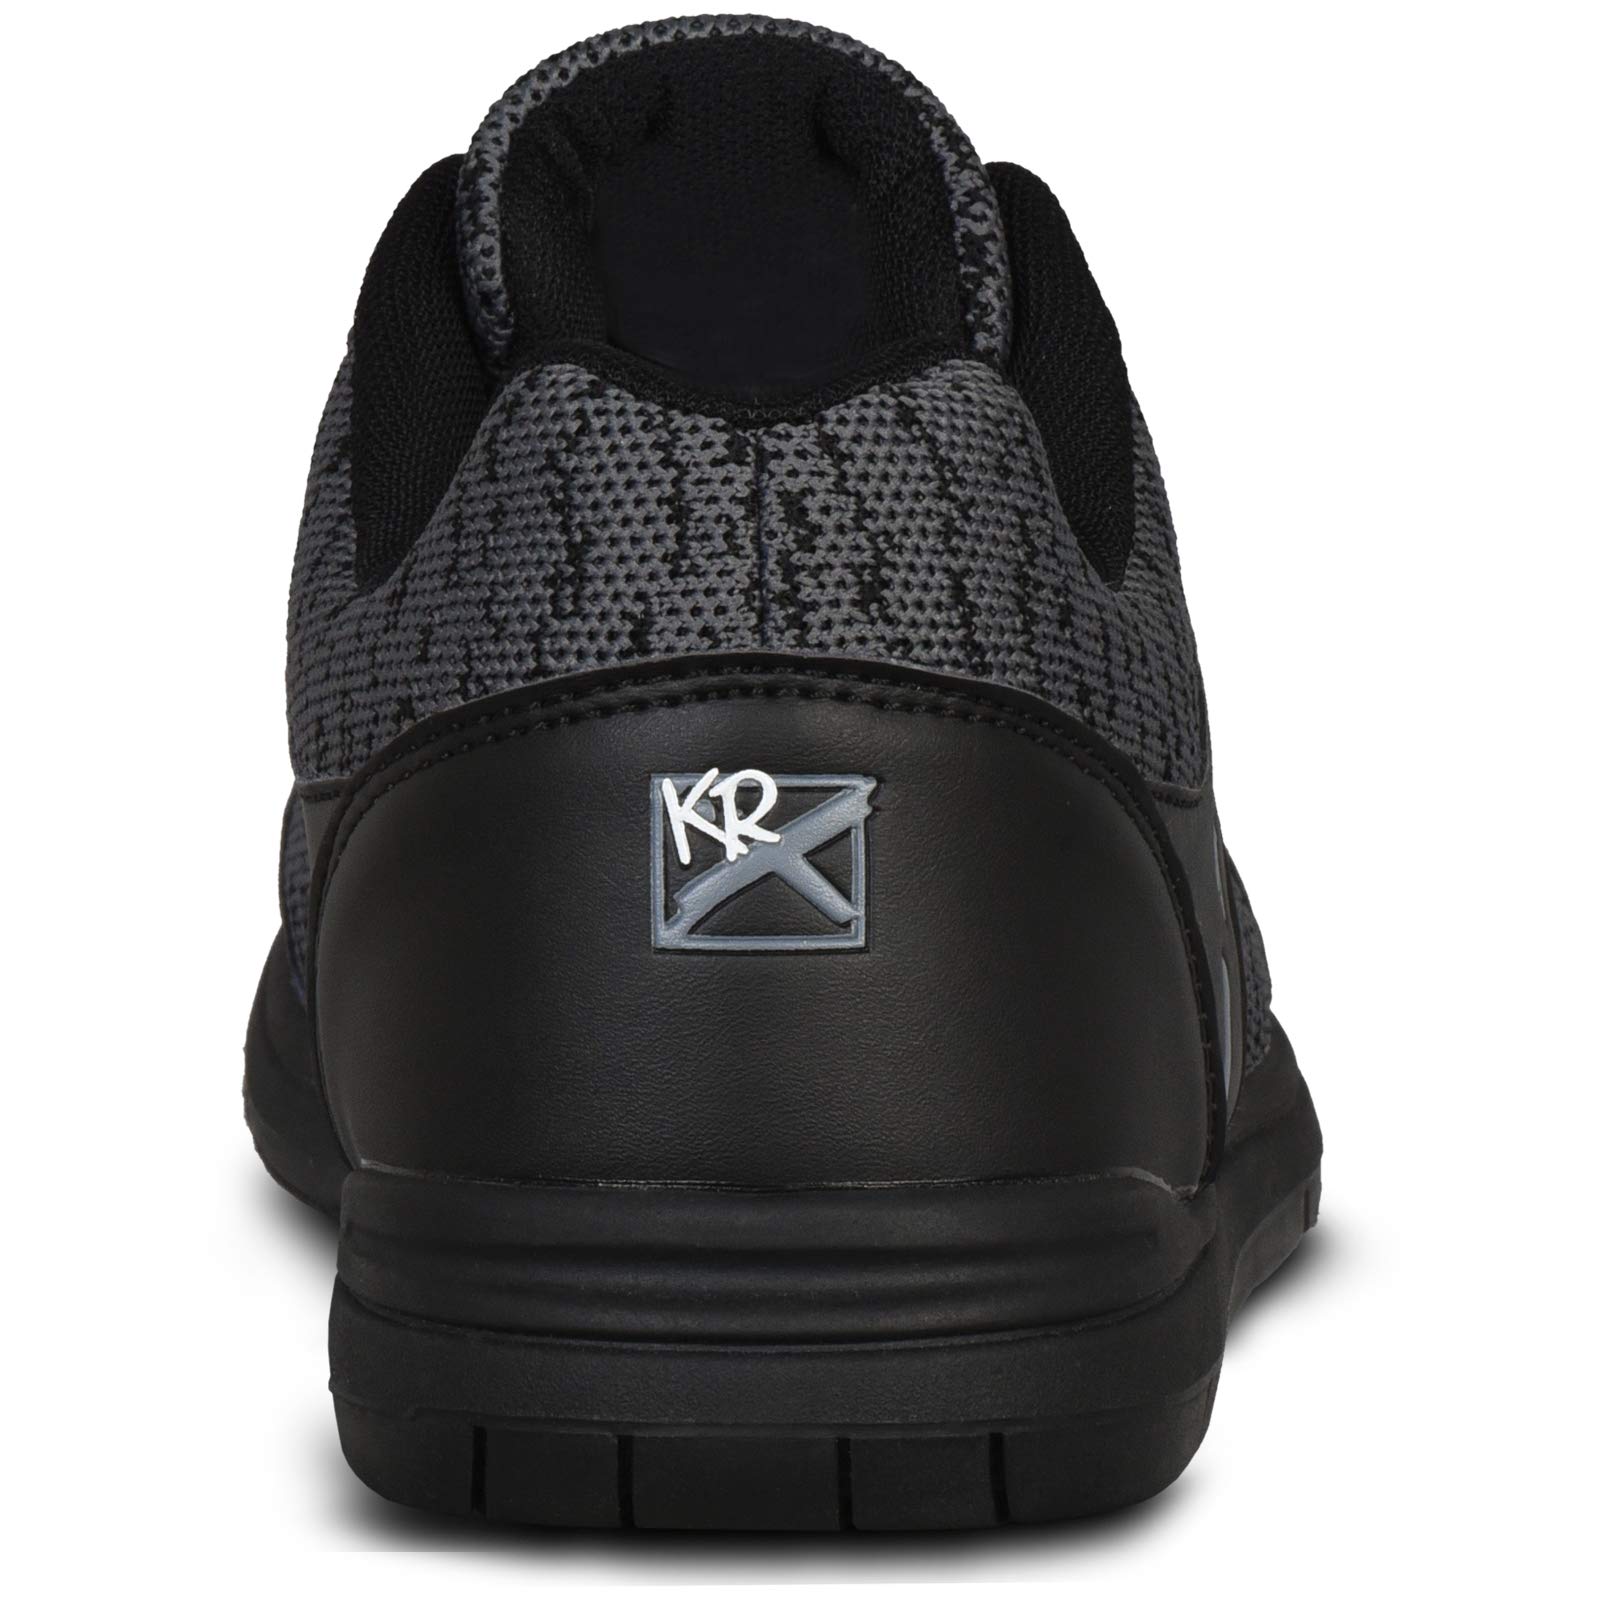 KR Strikeforce Unisex-Adult Bowling Shoes